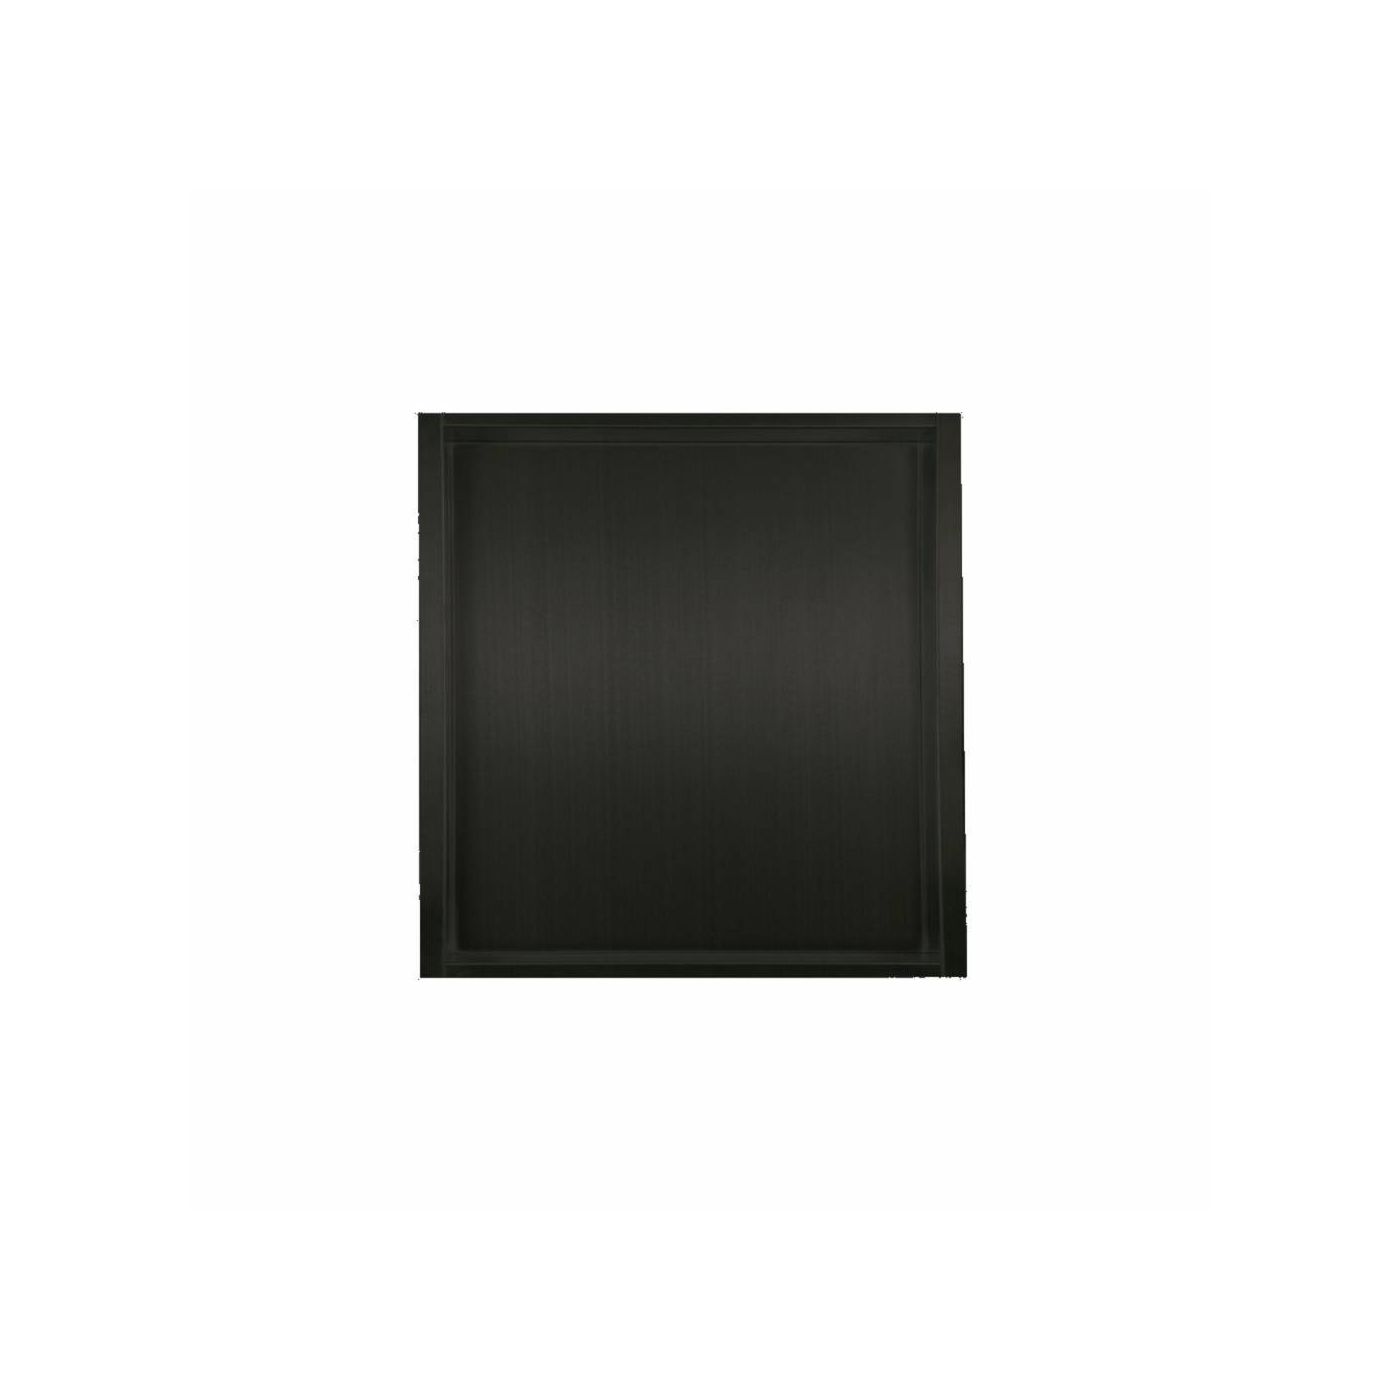 Neuer inbouwnis 30x30 mat zwart